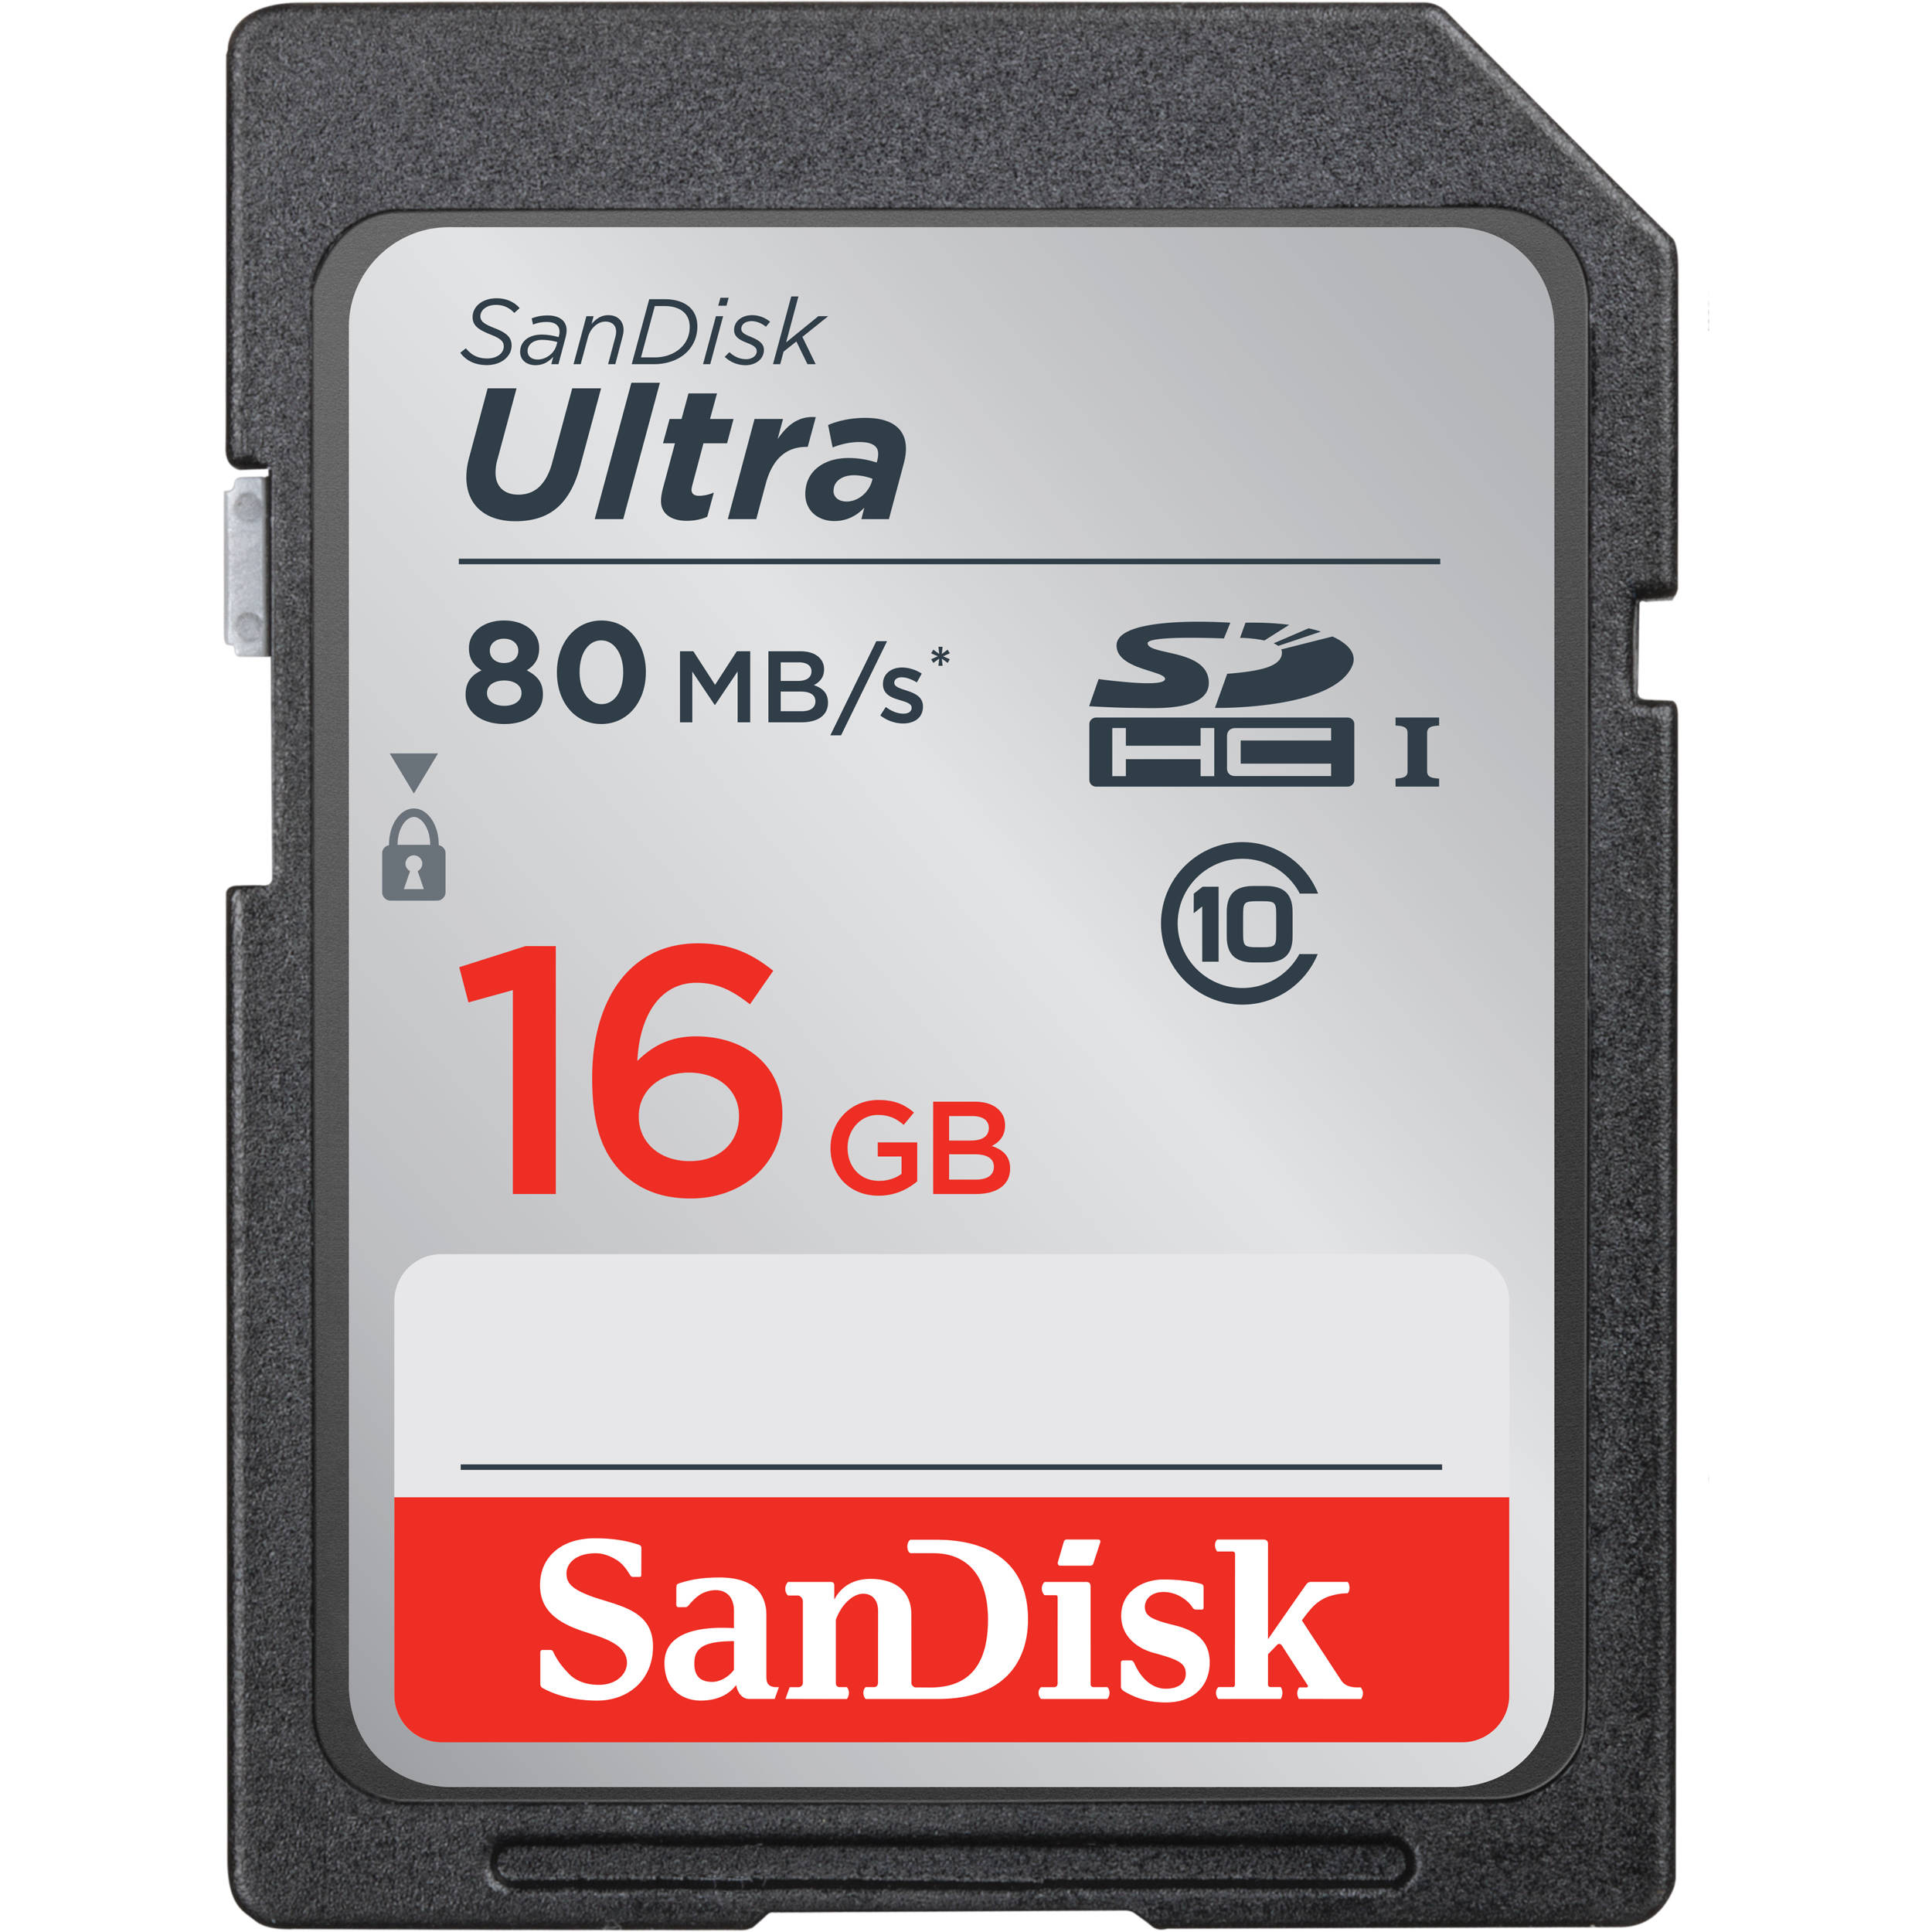 Evoke memory card with 9 scenes -SanDisk 16GB Ultra Class 10 SD Card